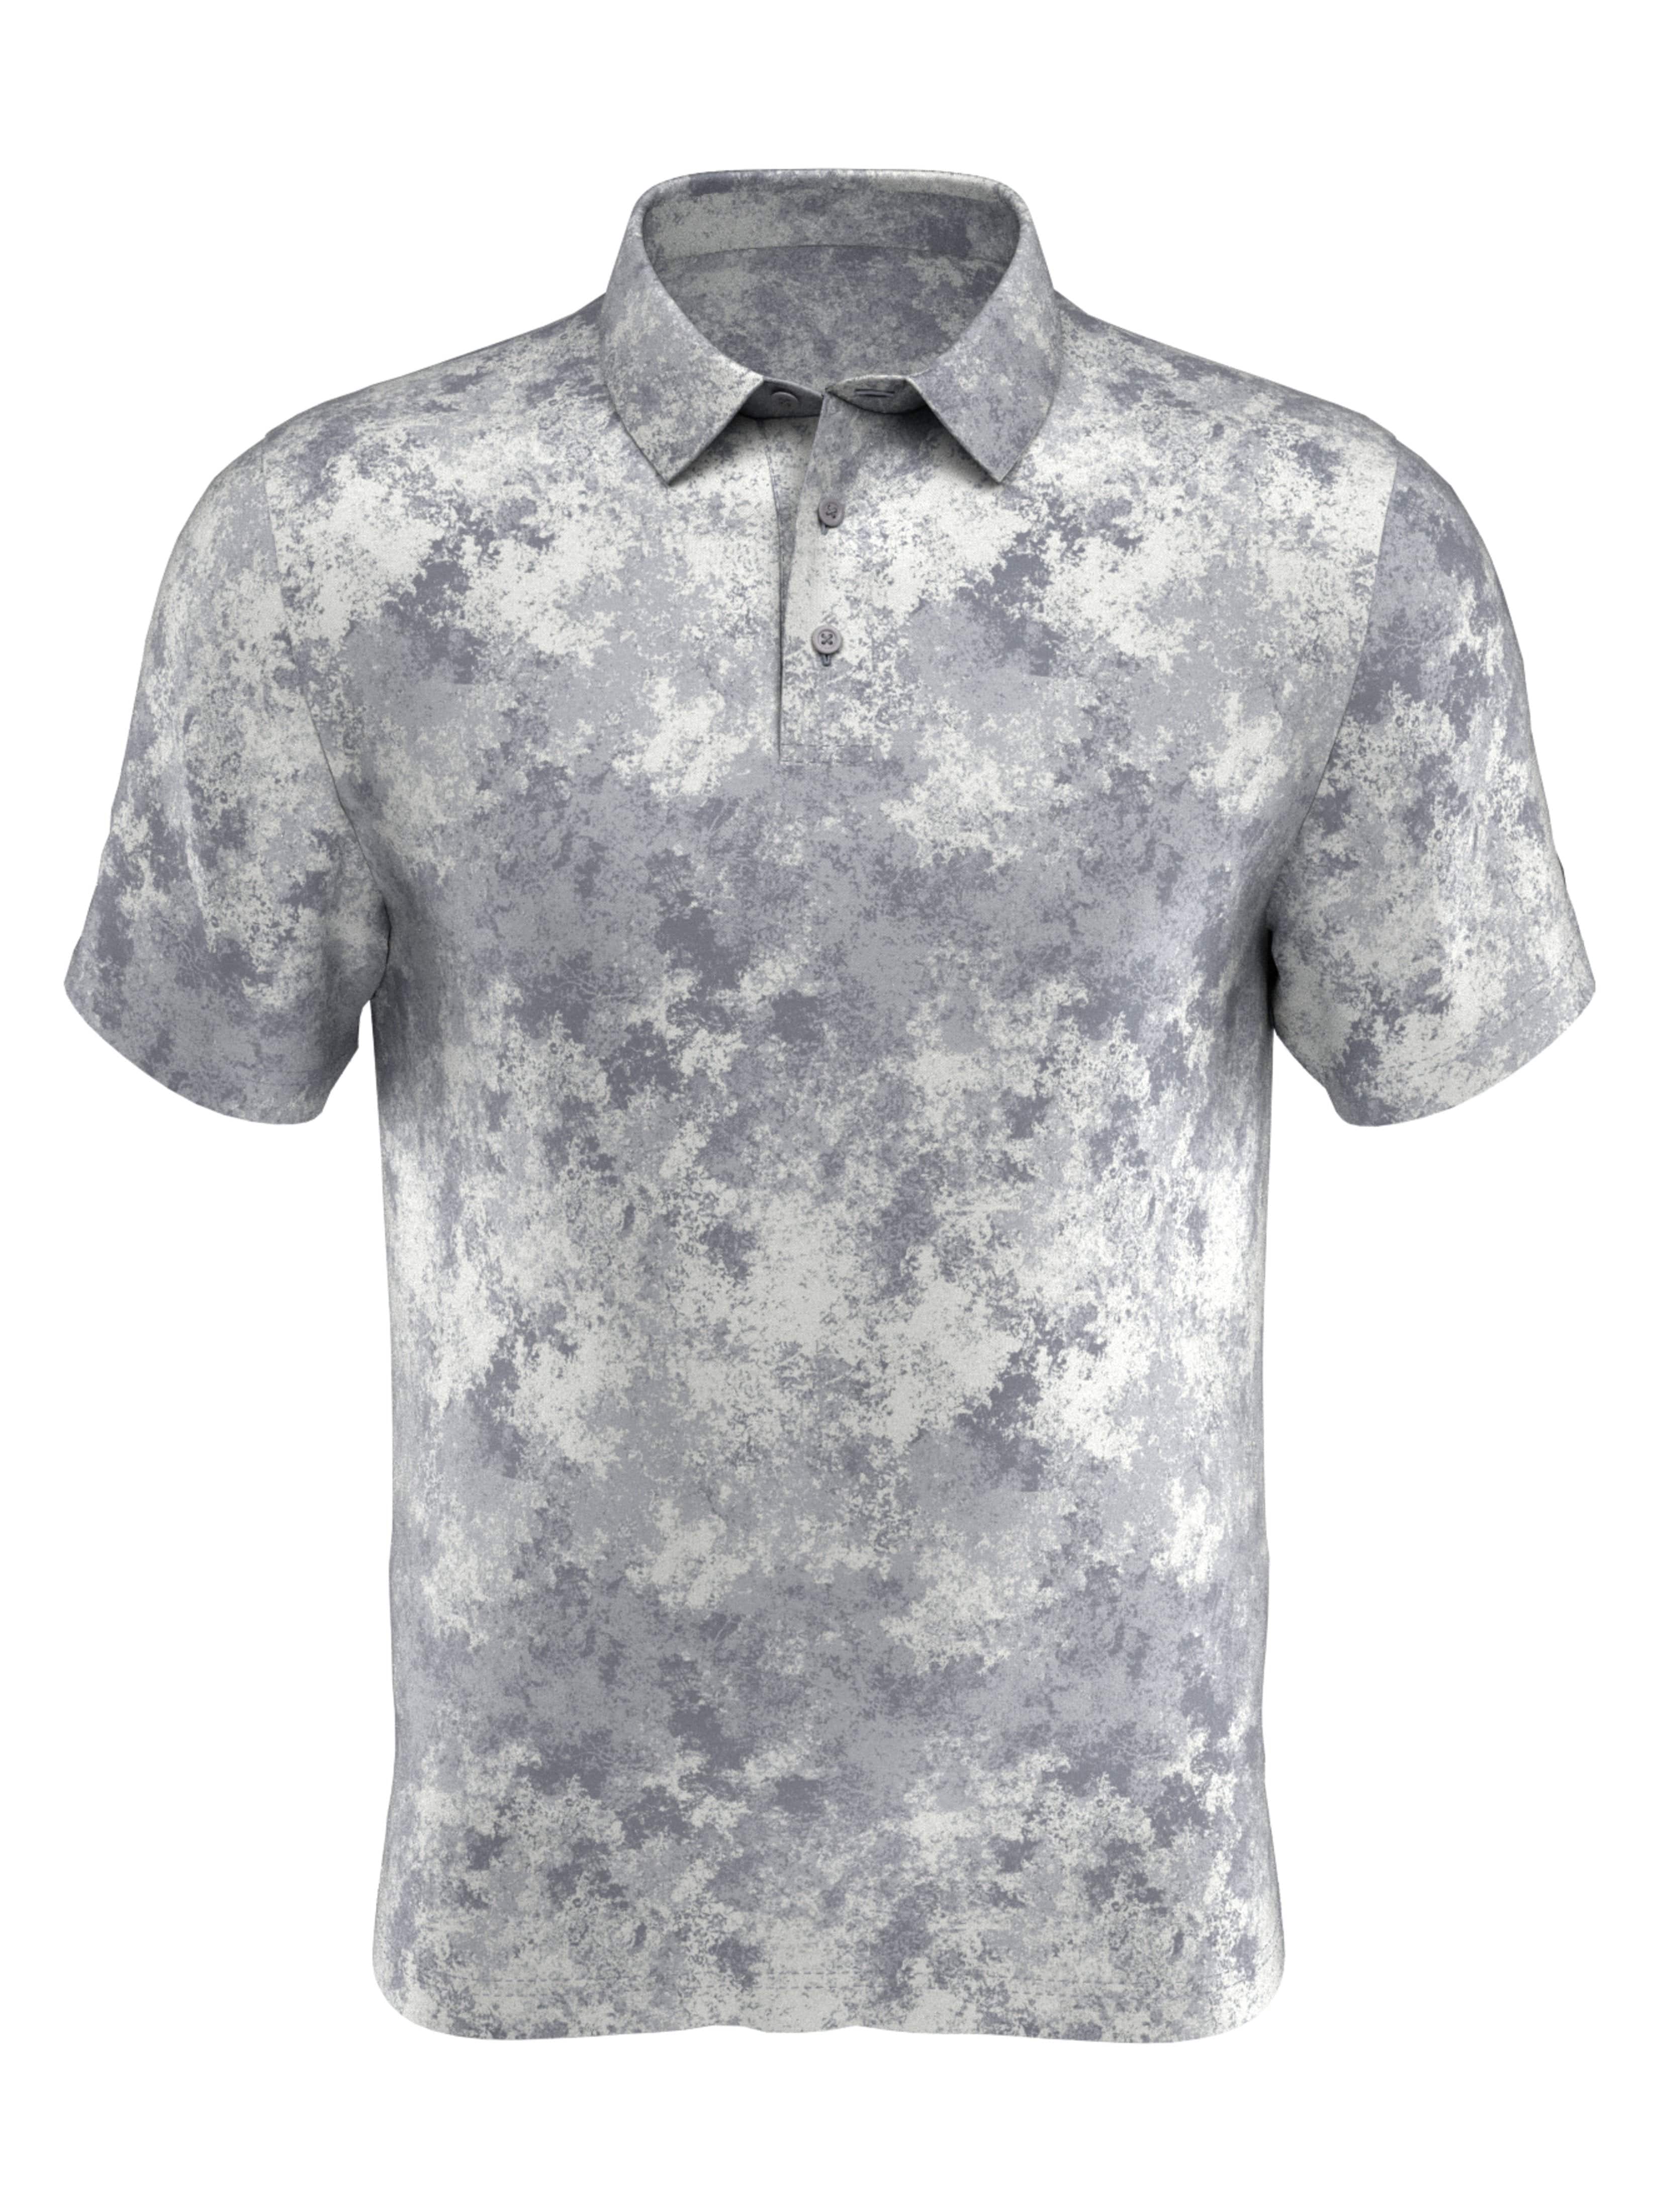 PGA TOUR Apparel Boys Natures Marble Print Polo Shirt, Size Medium, Tradewinds/Arctic Ice Gray, 100% Polyester | Golf Apparel Shop